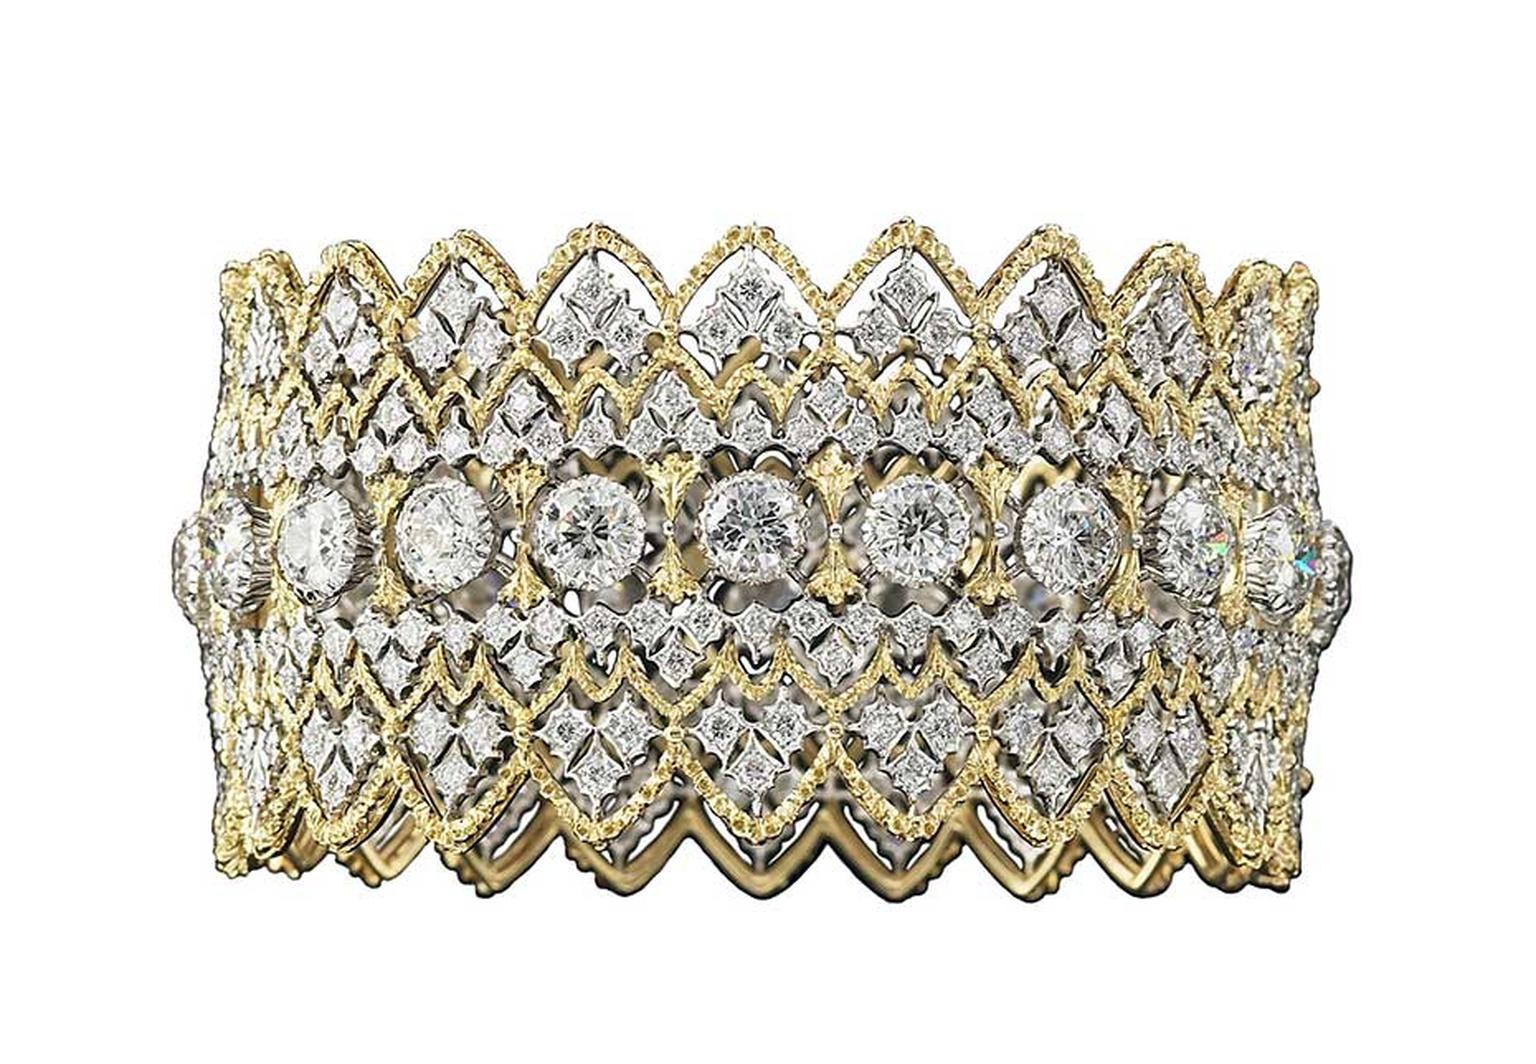 Buccellati gold lace-effect cuff bracelet with diamonds.